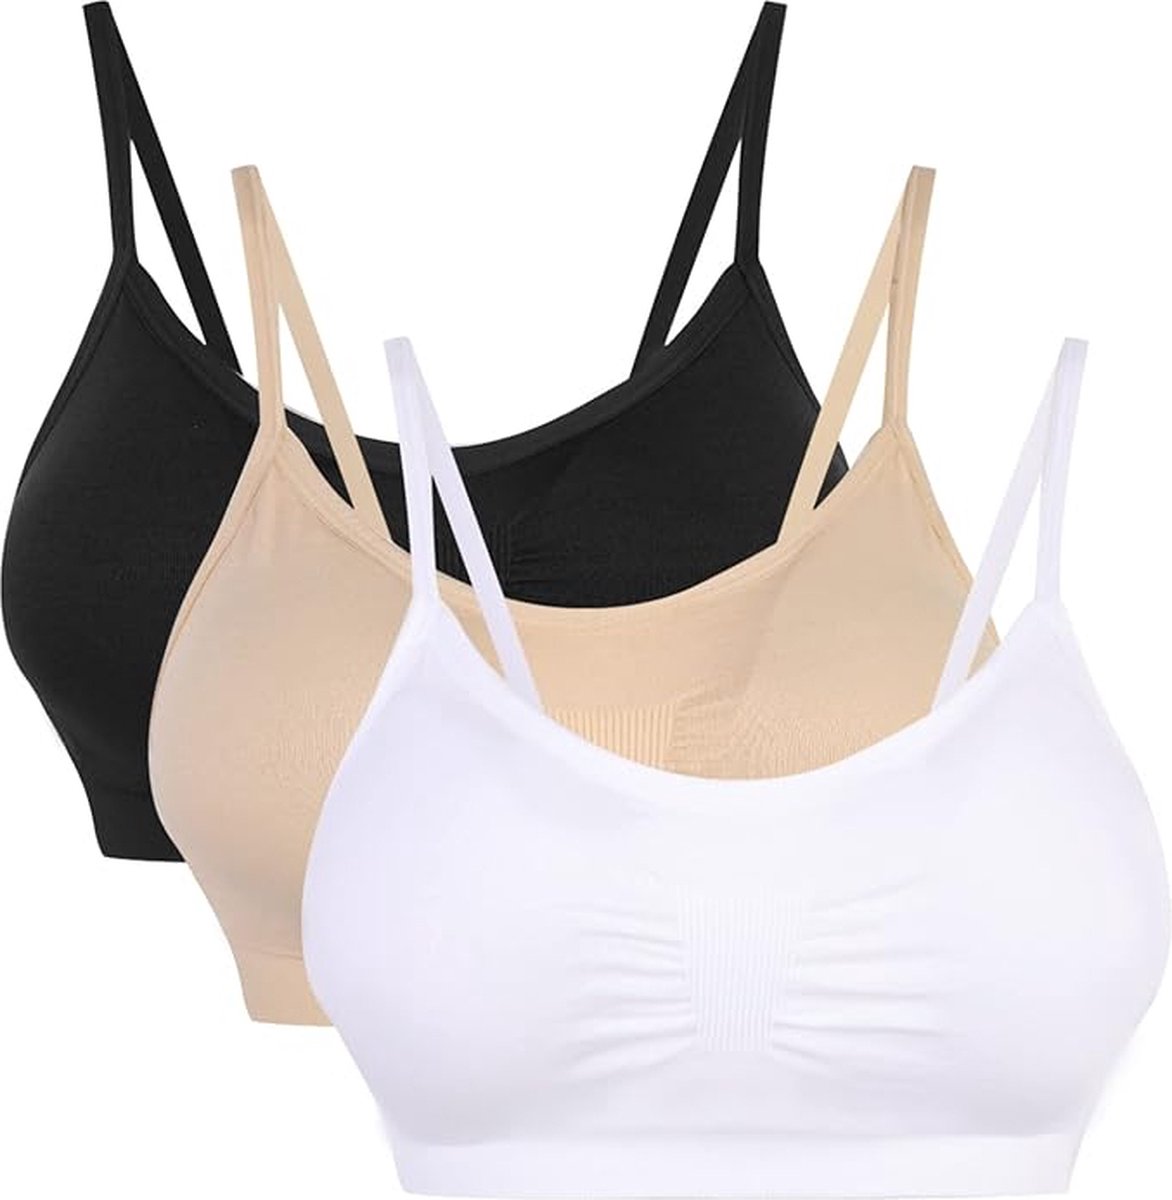 Dames ondergoed Strech Duenn Push up Yoga Sports BH Bra Top Set voor fitnesstraining bekleding 2-/3-pack - kleuren Wit+Beige+zwart - maat XL